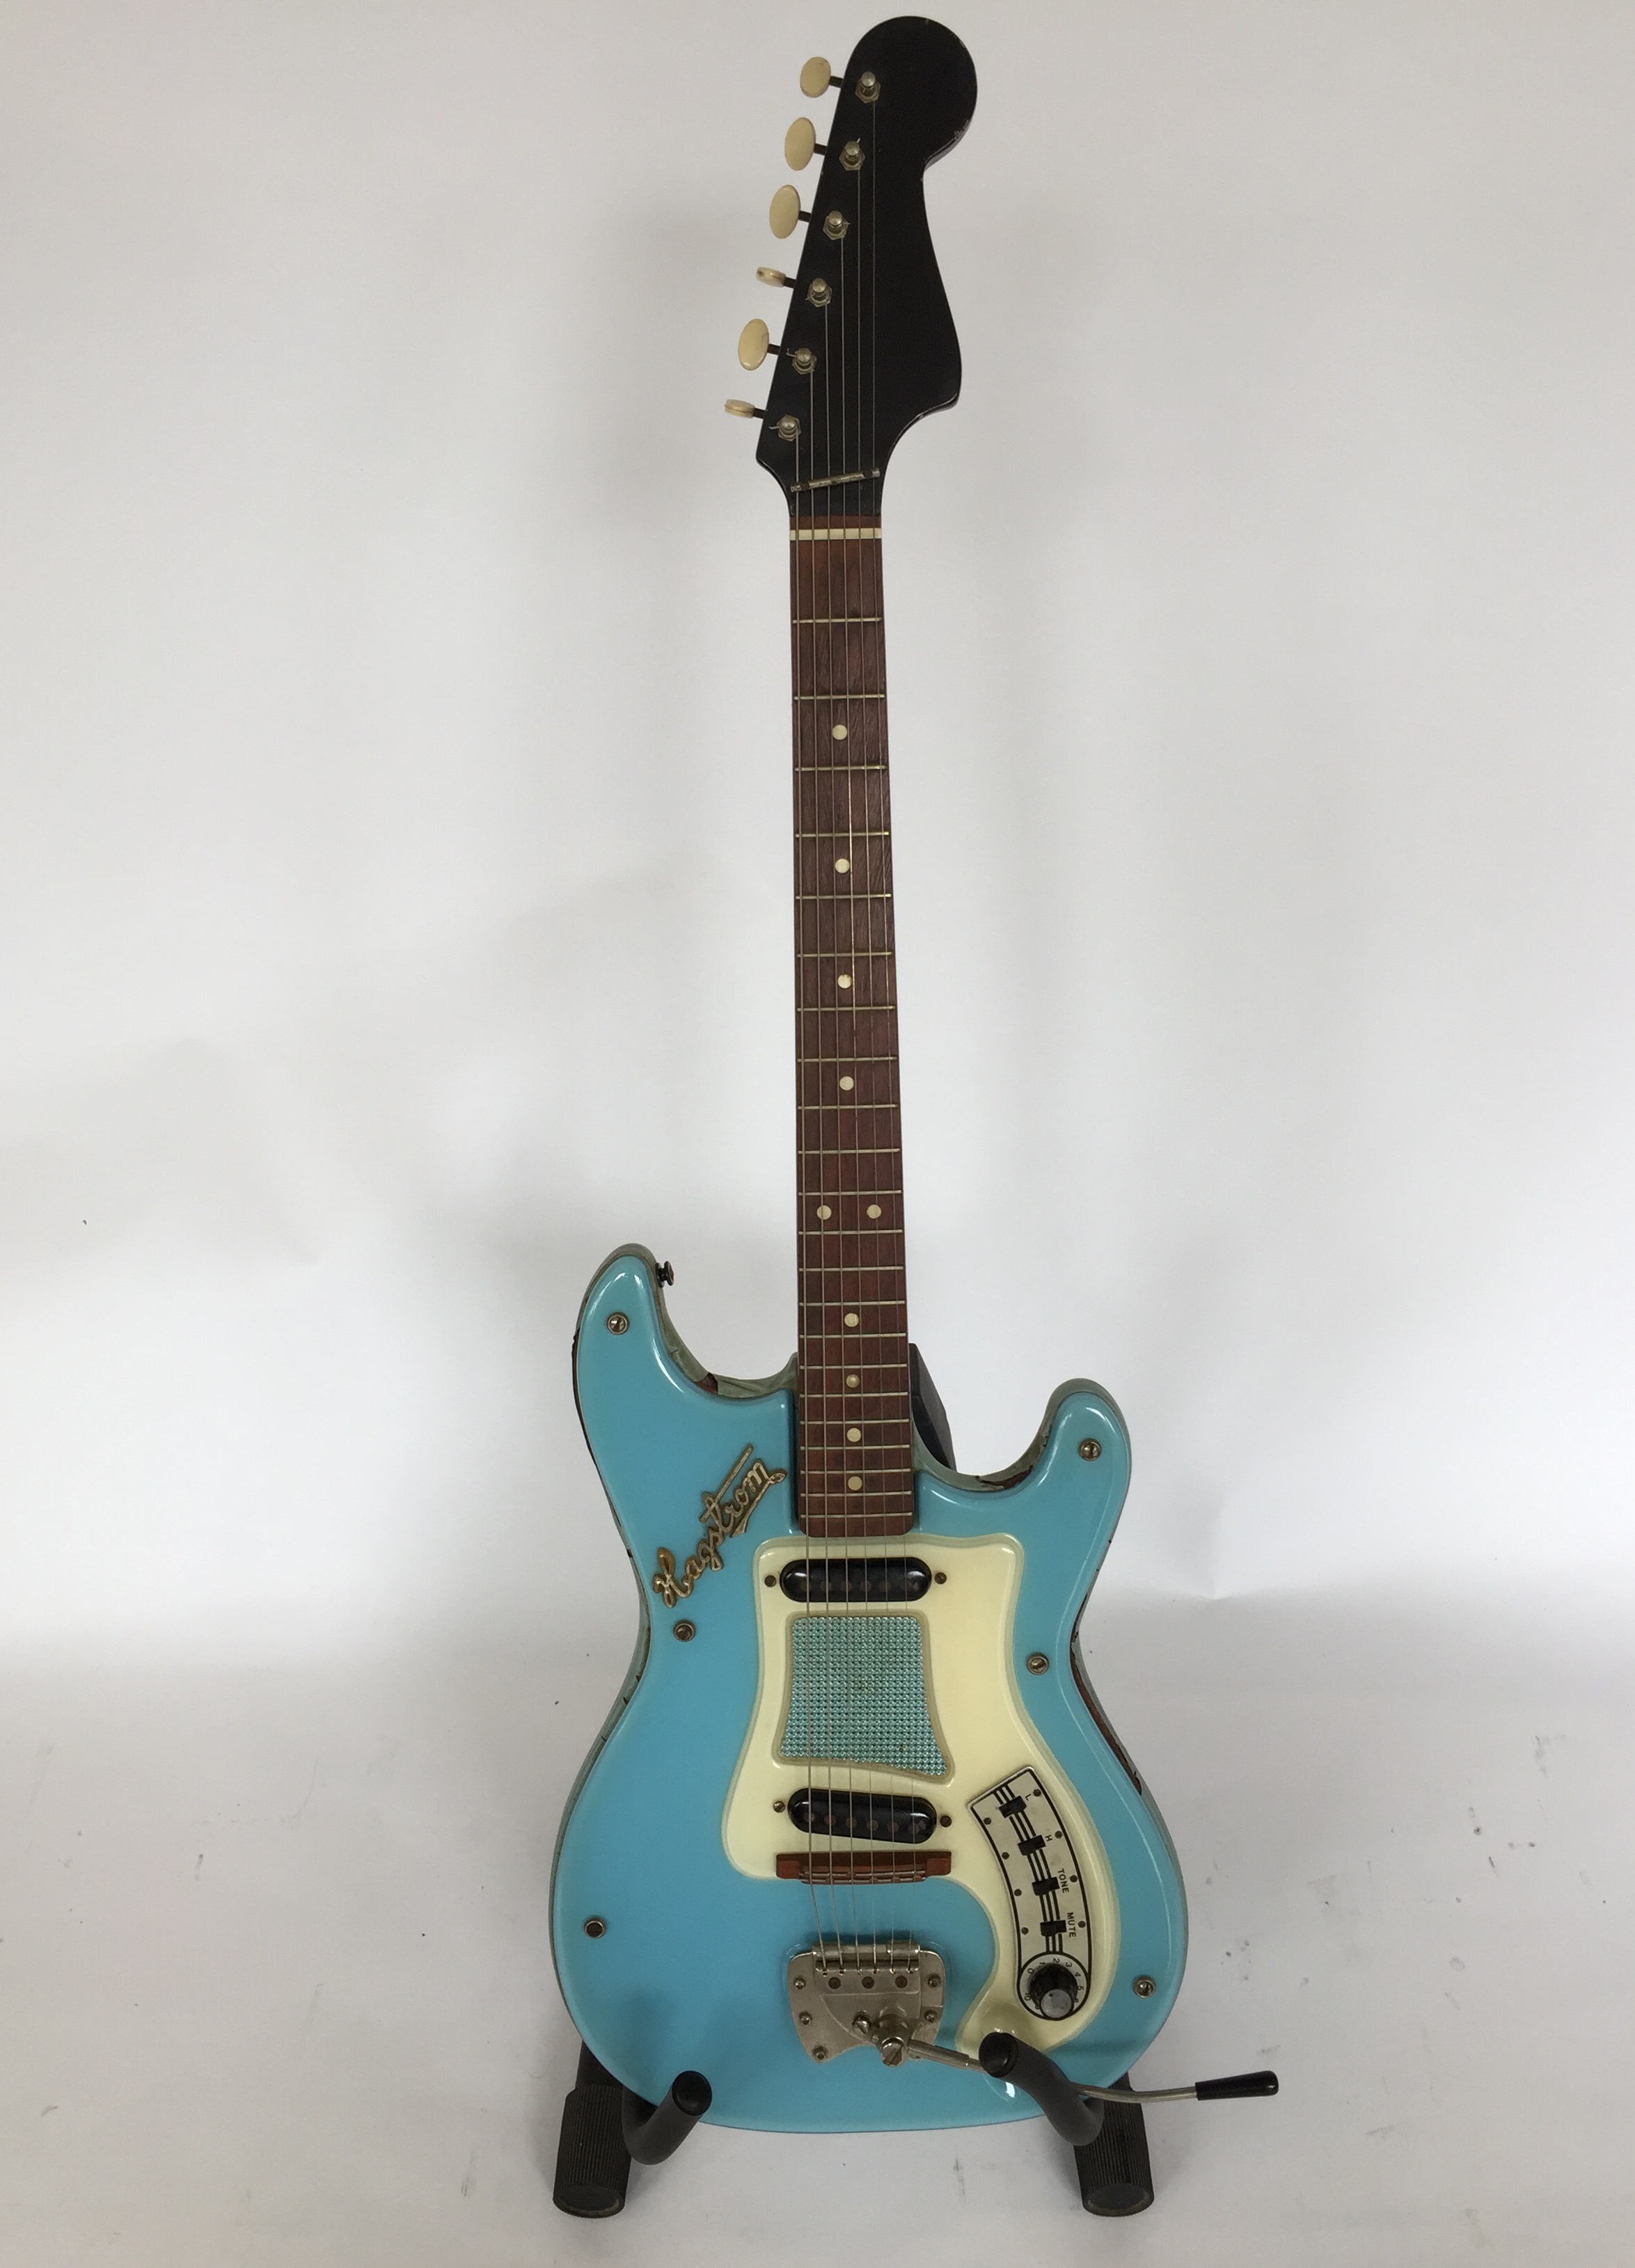 HAGSTROM FUTURAMA III 1964 BLUE - serial 603965. Hagstrom KENT electric guitar made in 1964.